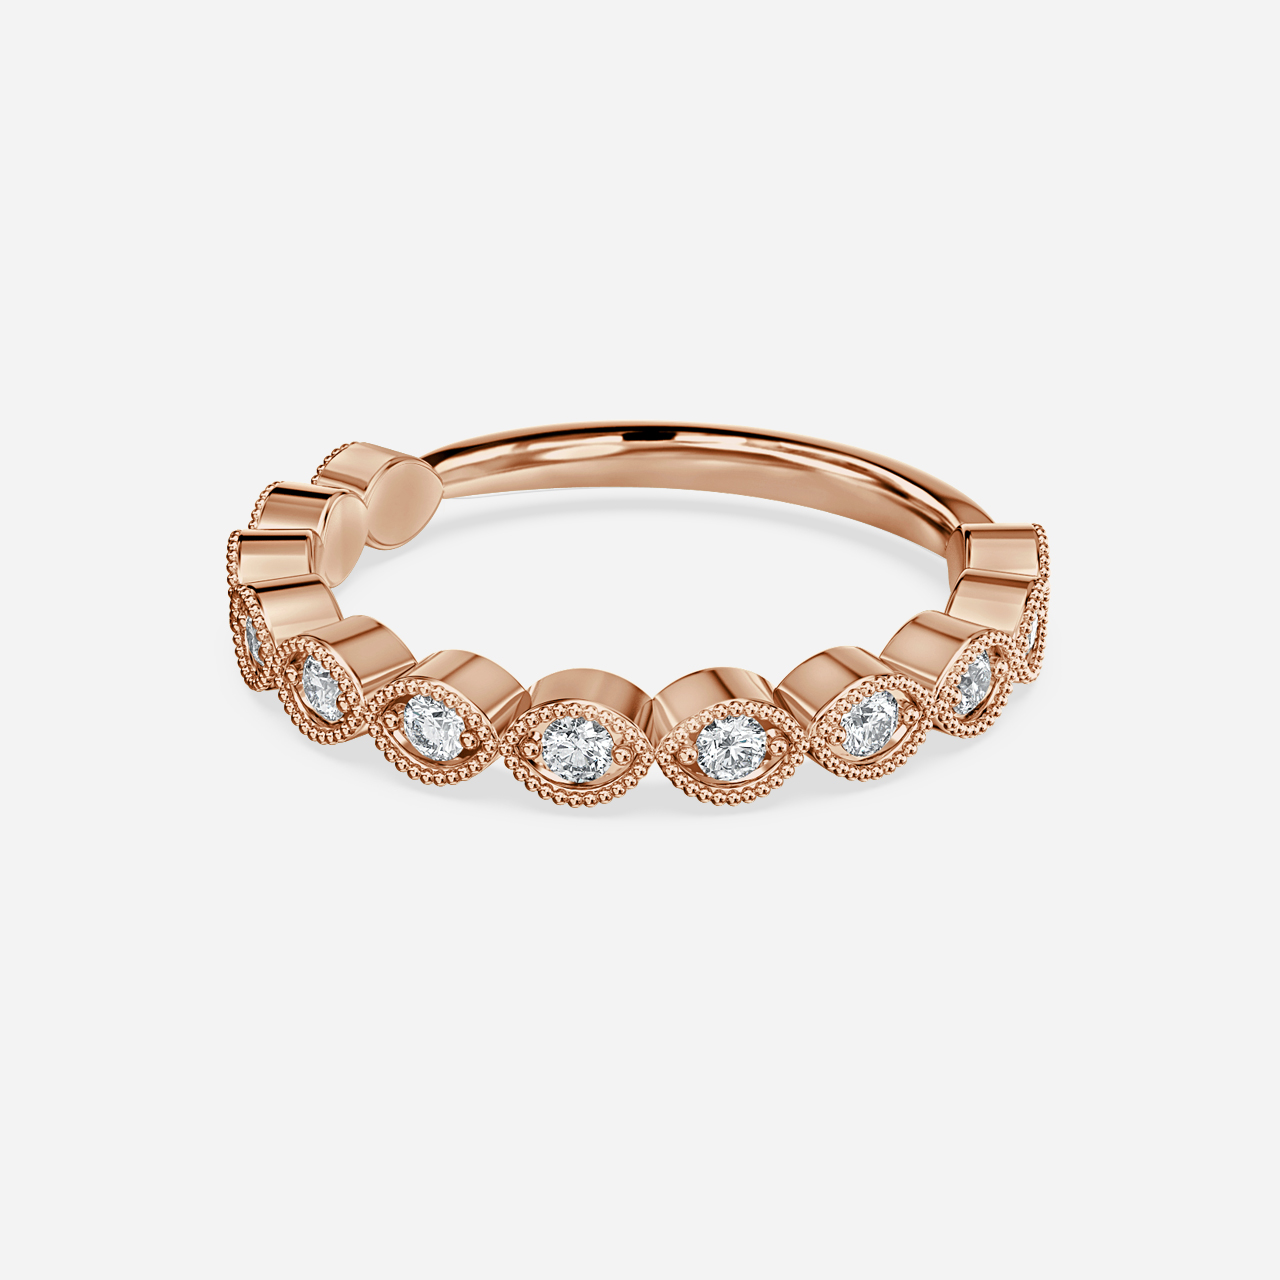 Miligrain Diamond Wedding ring In Rose Gold